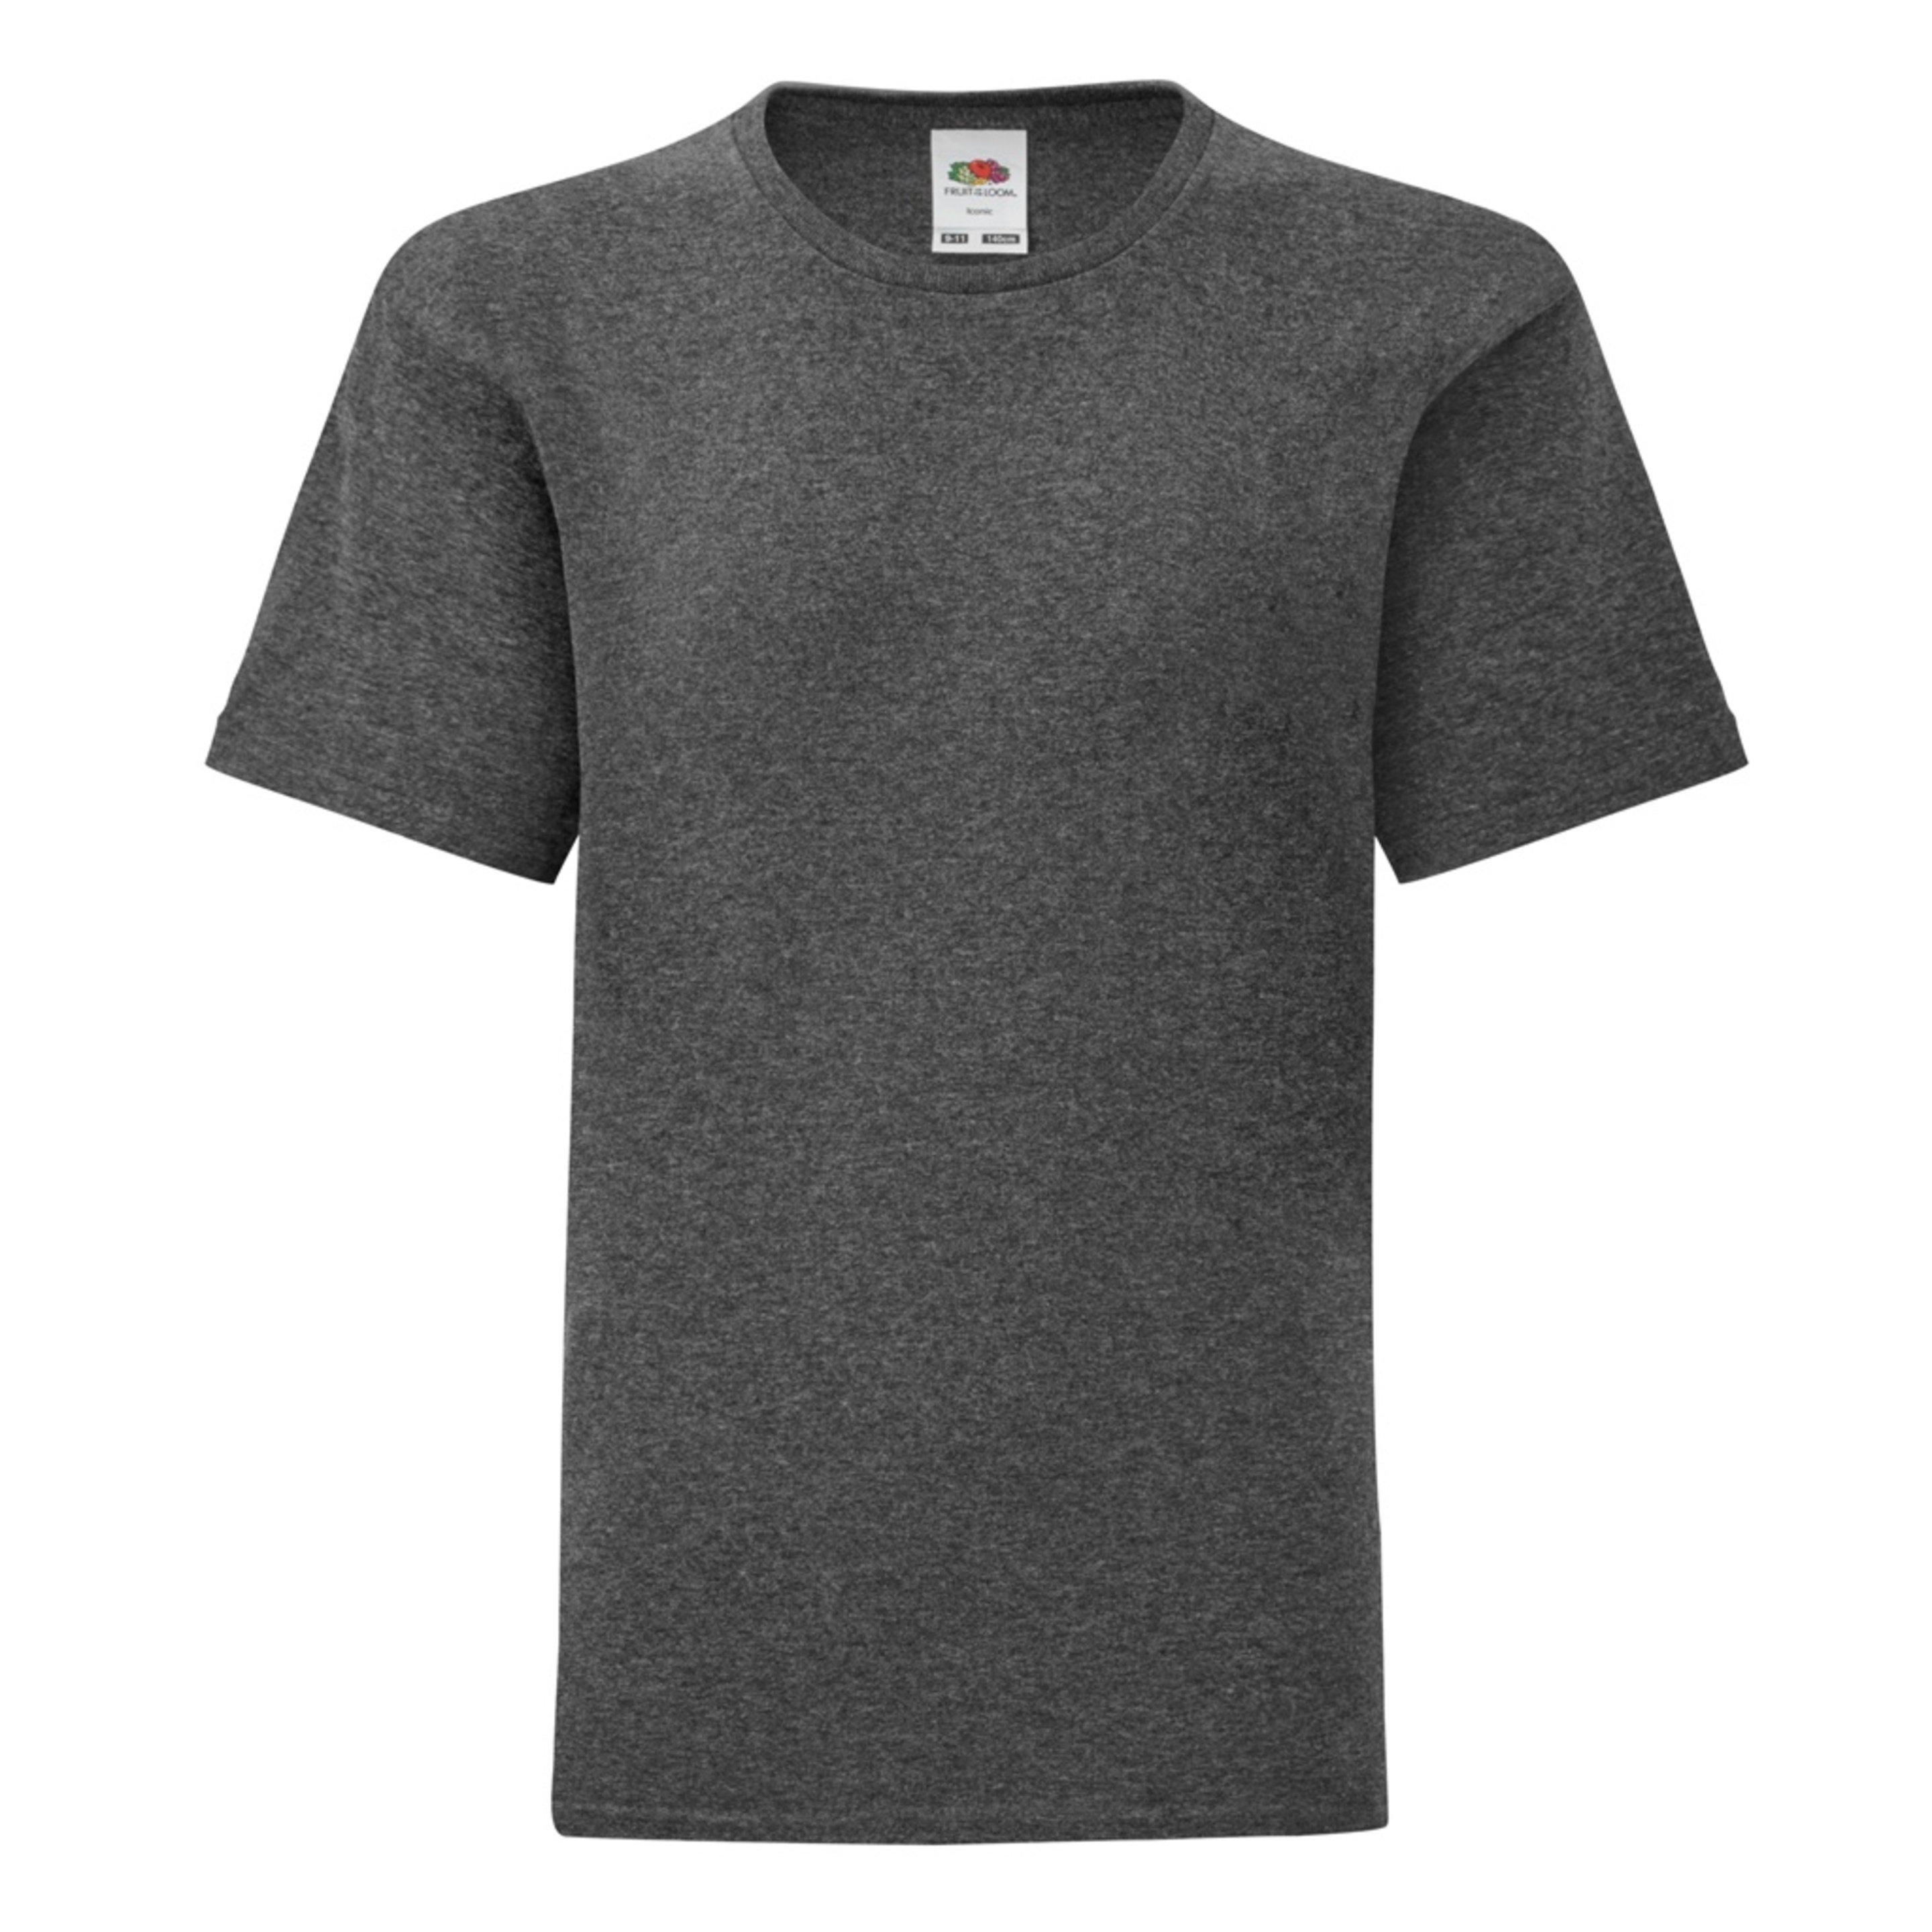 Camiseta Fruit Of The Loom Original - gris-oscuro - 